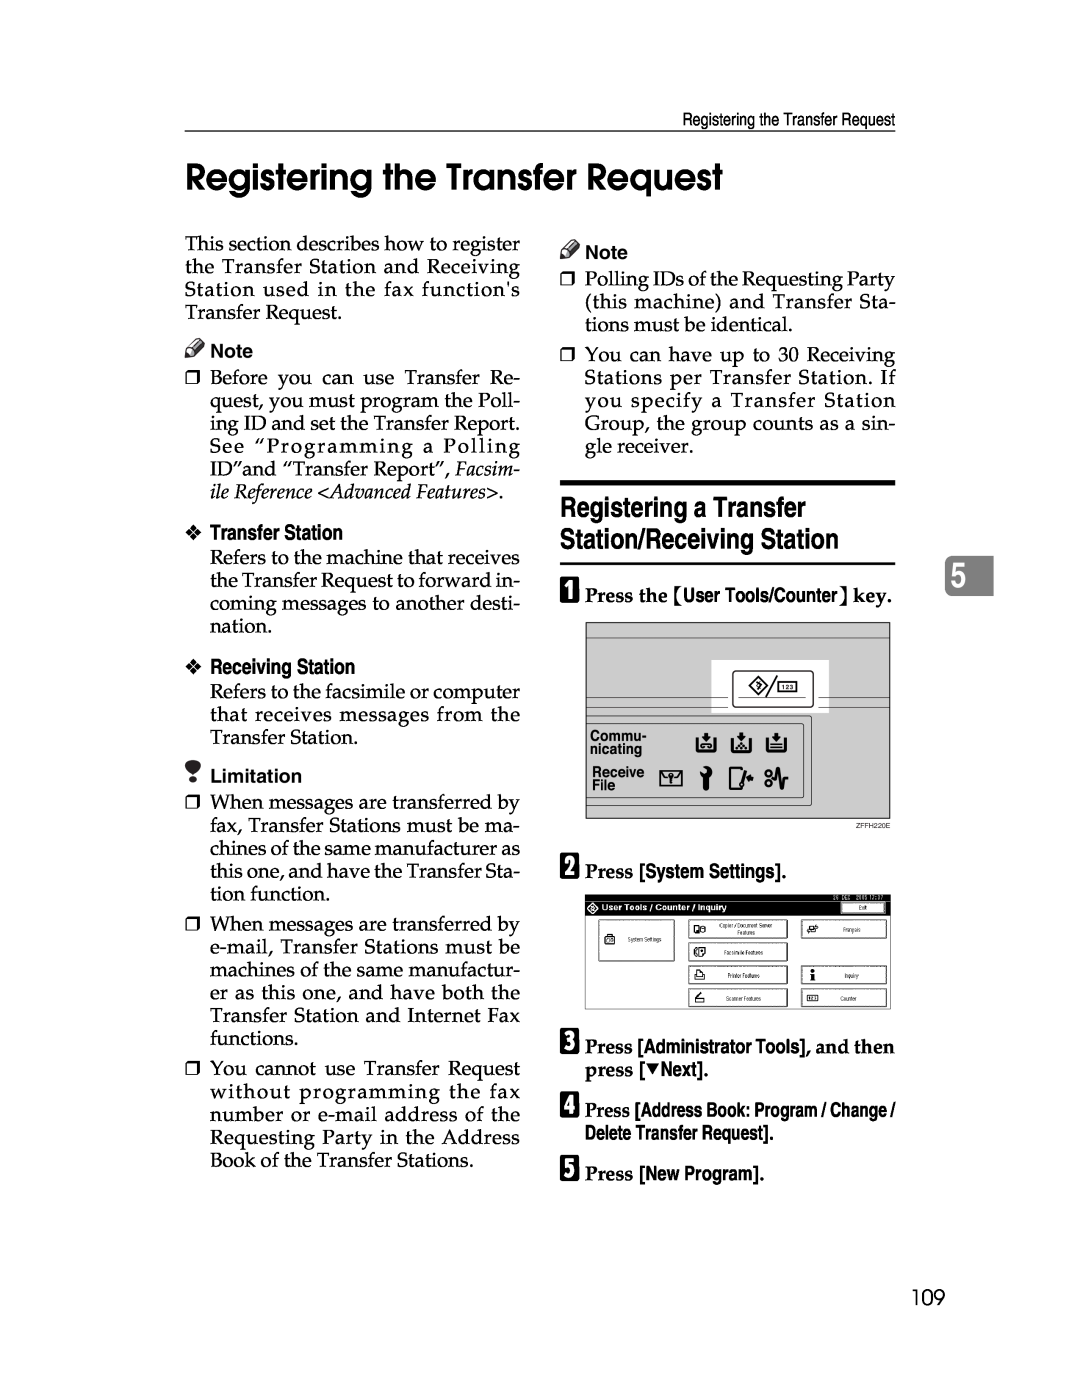 Lanier LD230, LD225 manual Registering the Transfer Request, Registering a Transfer Station/Receiving Station, Limitation 